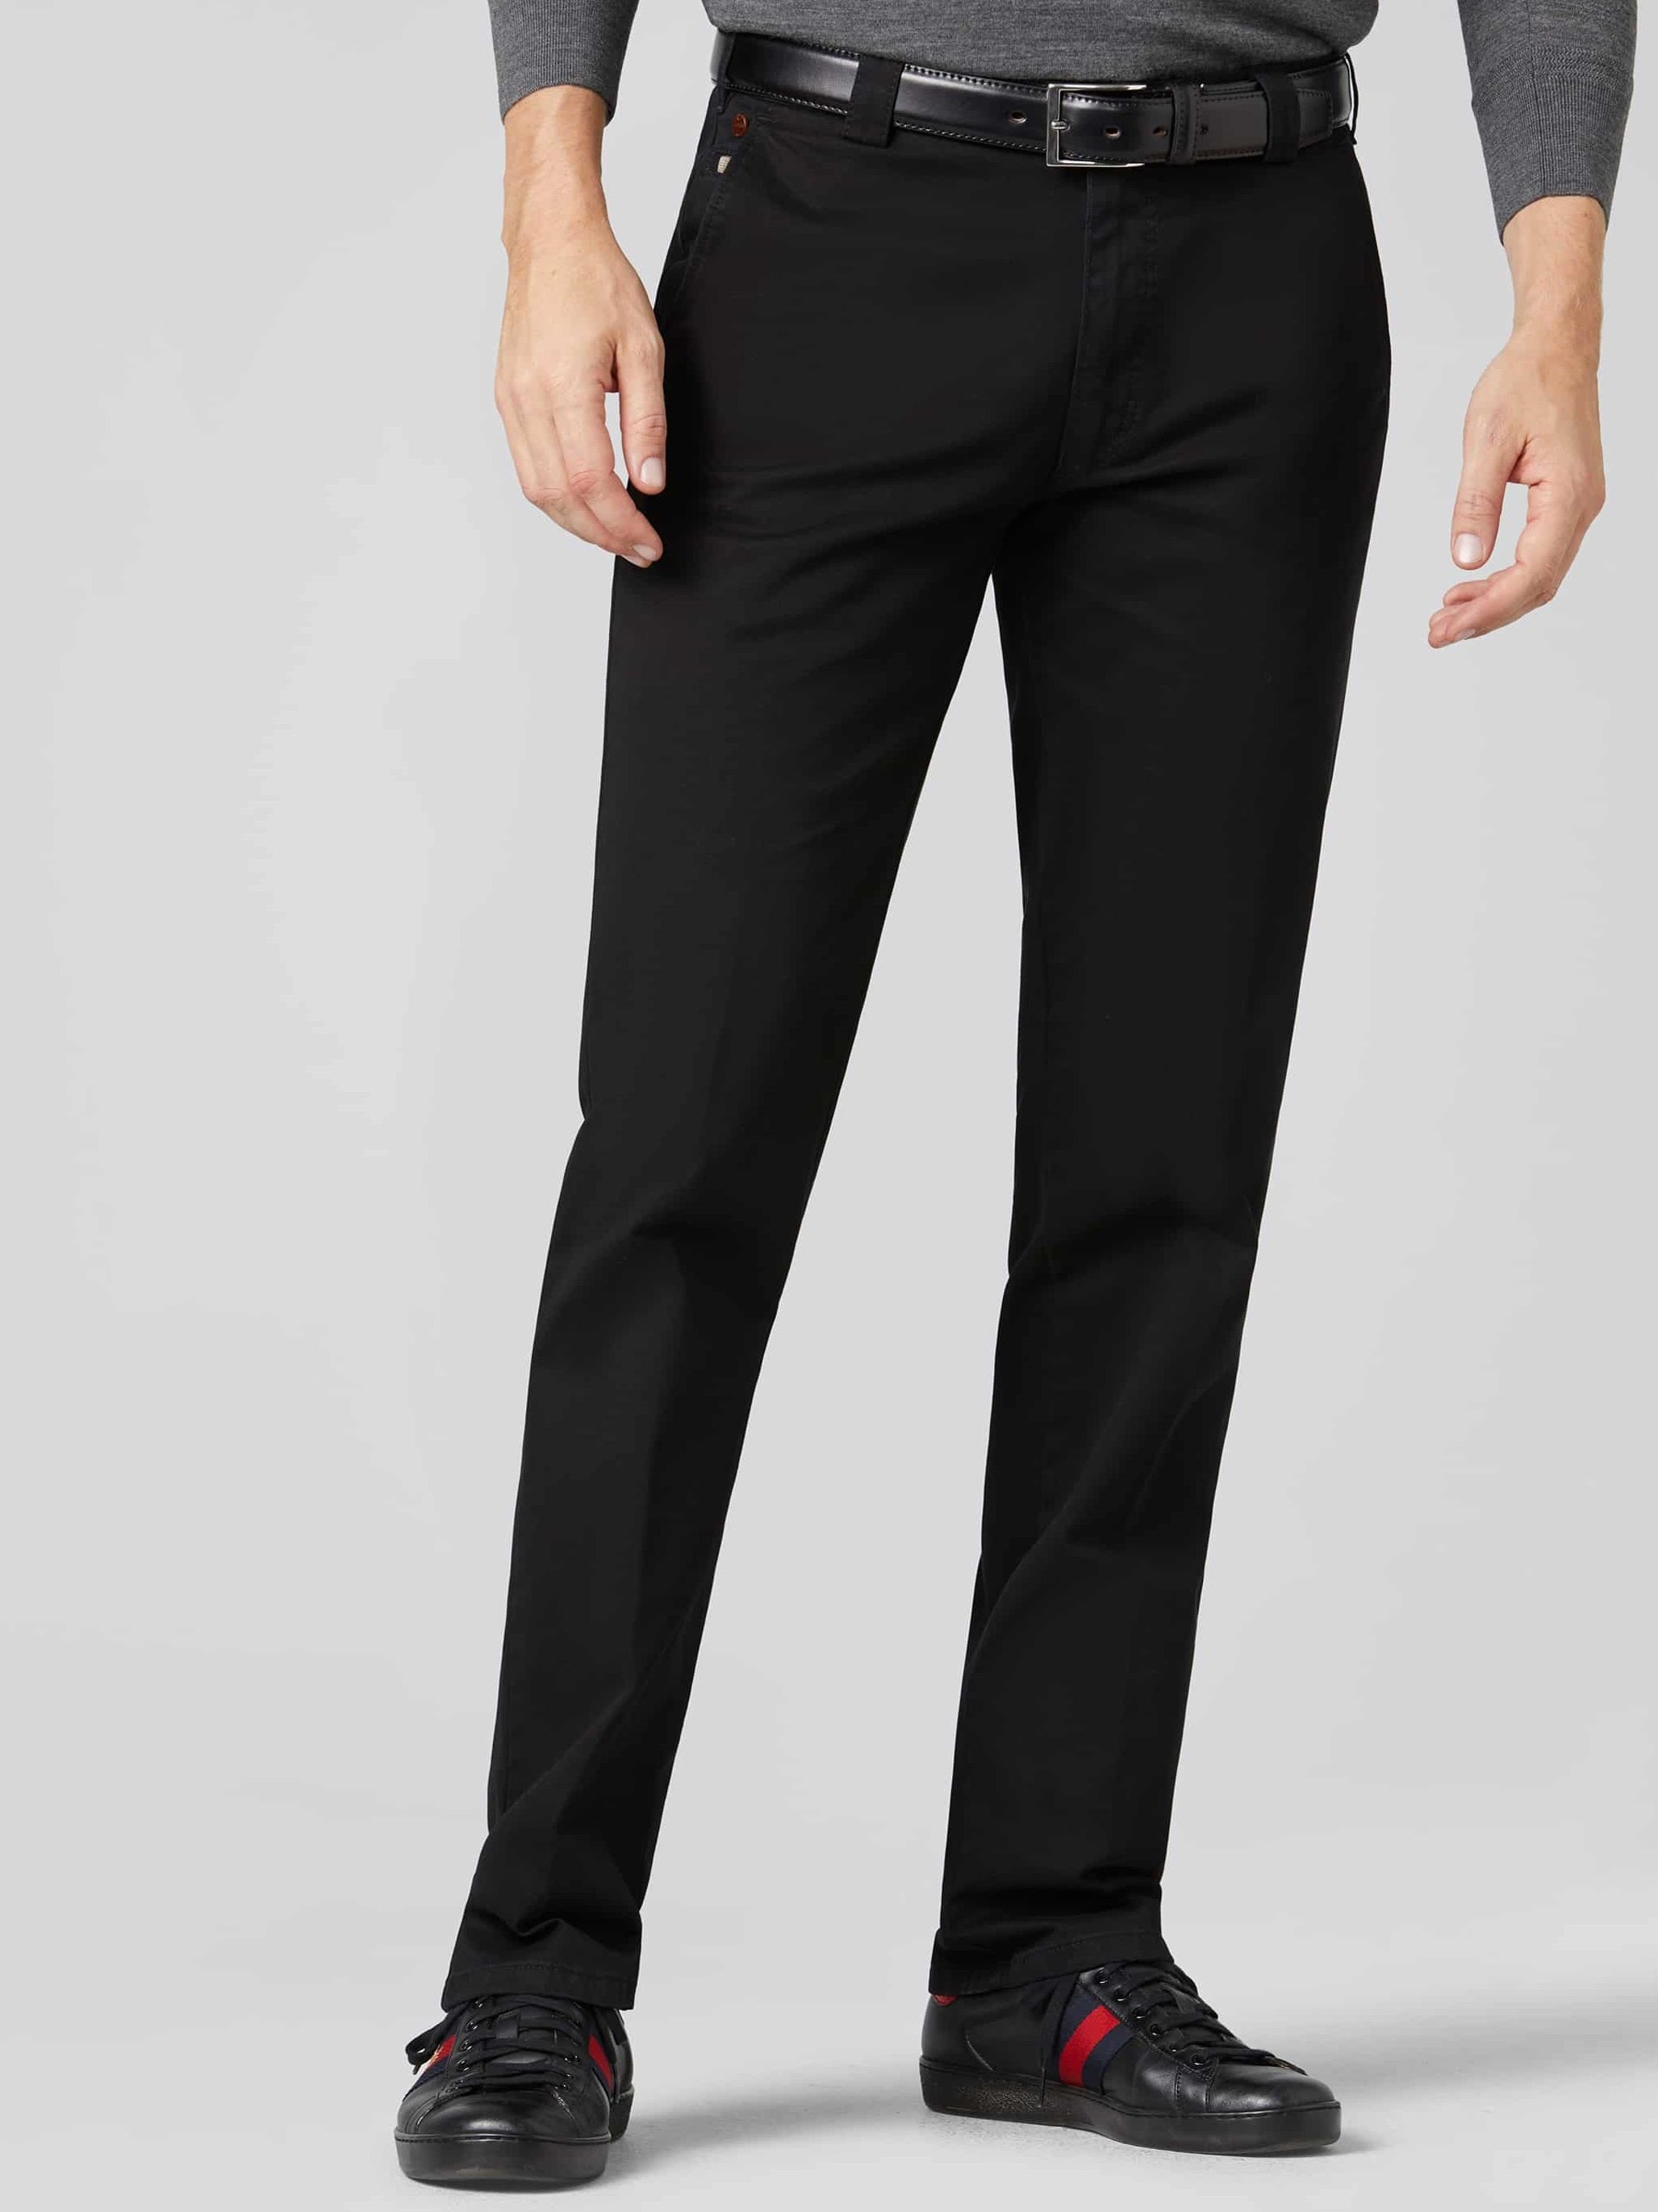 MEYER Trousers - Roma 316 Luxury Cotton Chinos - Black